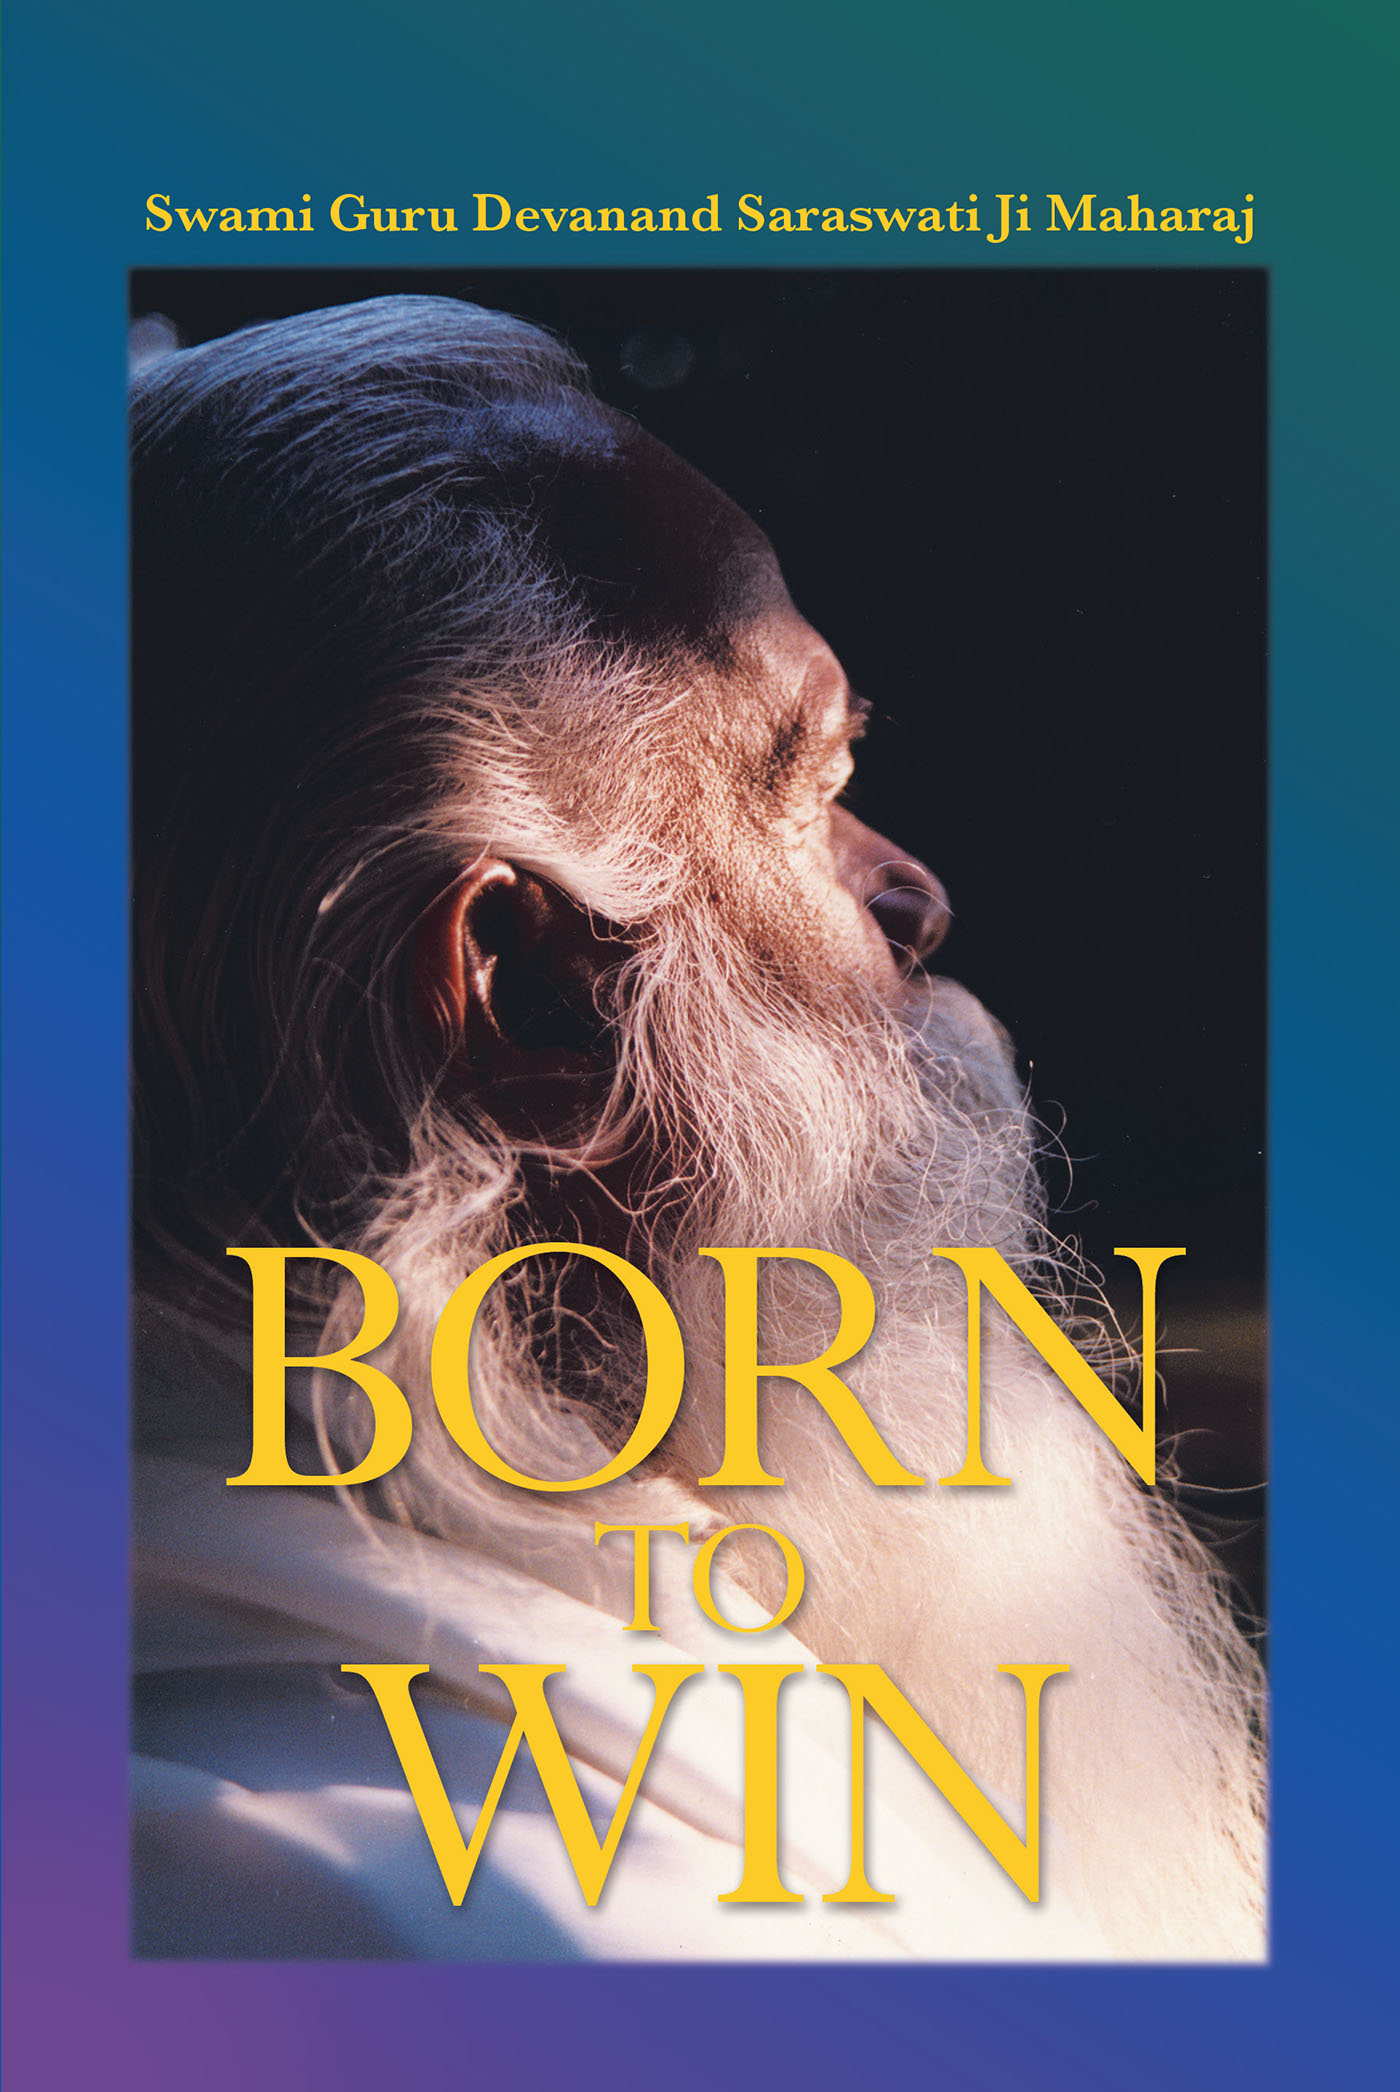 Author Swami Guru Devanand Saraswati Ji Maharaj’s Book, “Born to Win,” is an Insightful Tool for Readers Seeking to Overcome Their Life's Challenges to be Happy